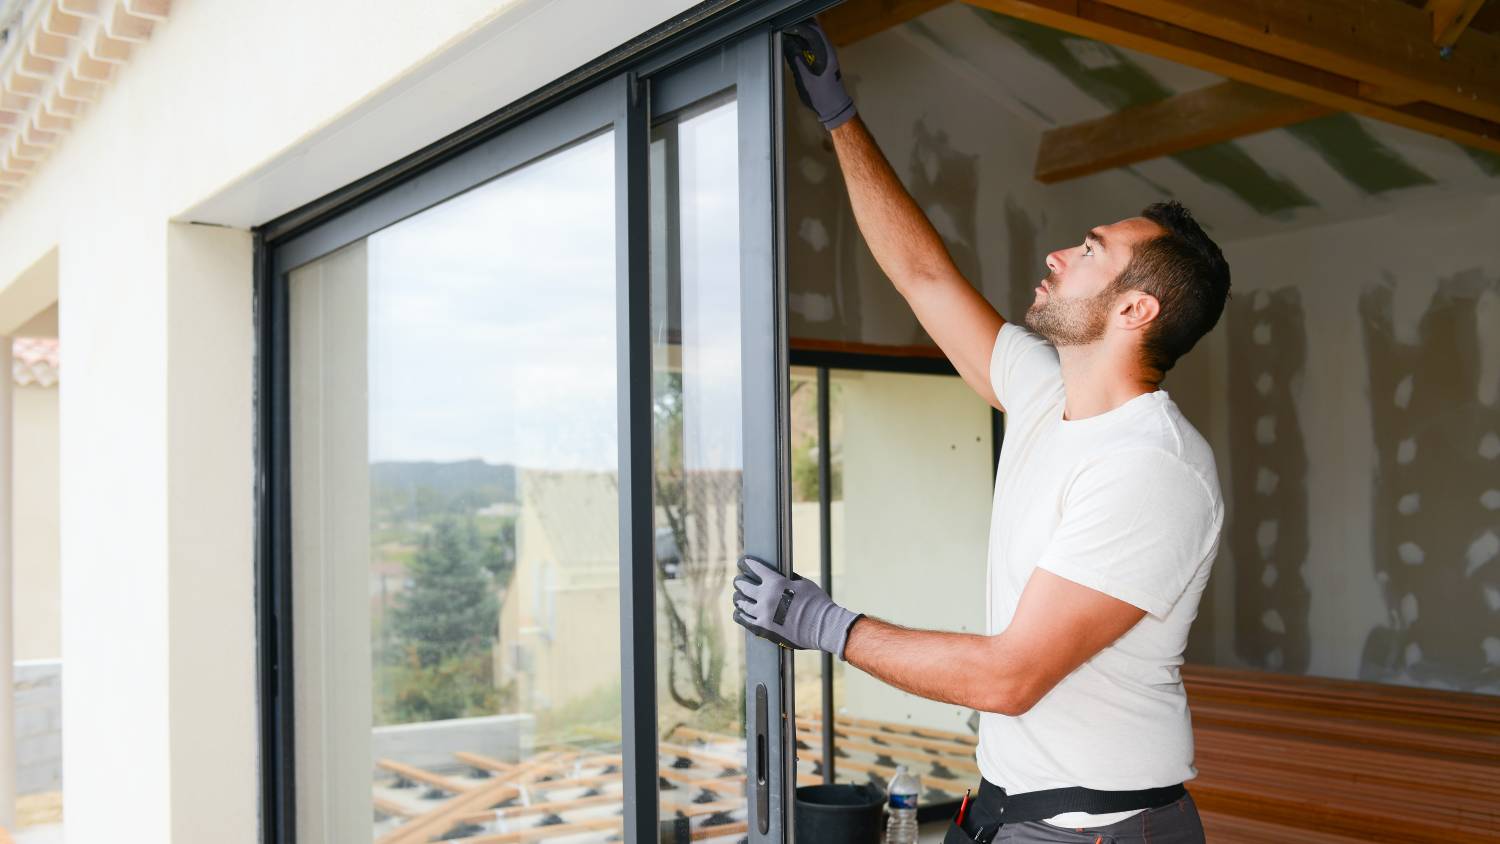 Tasker installing windows in a residential building